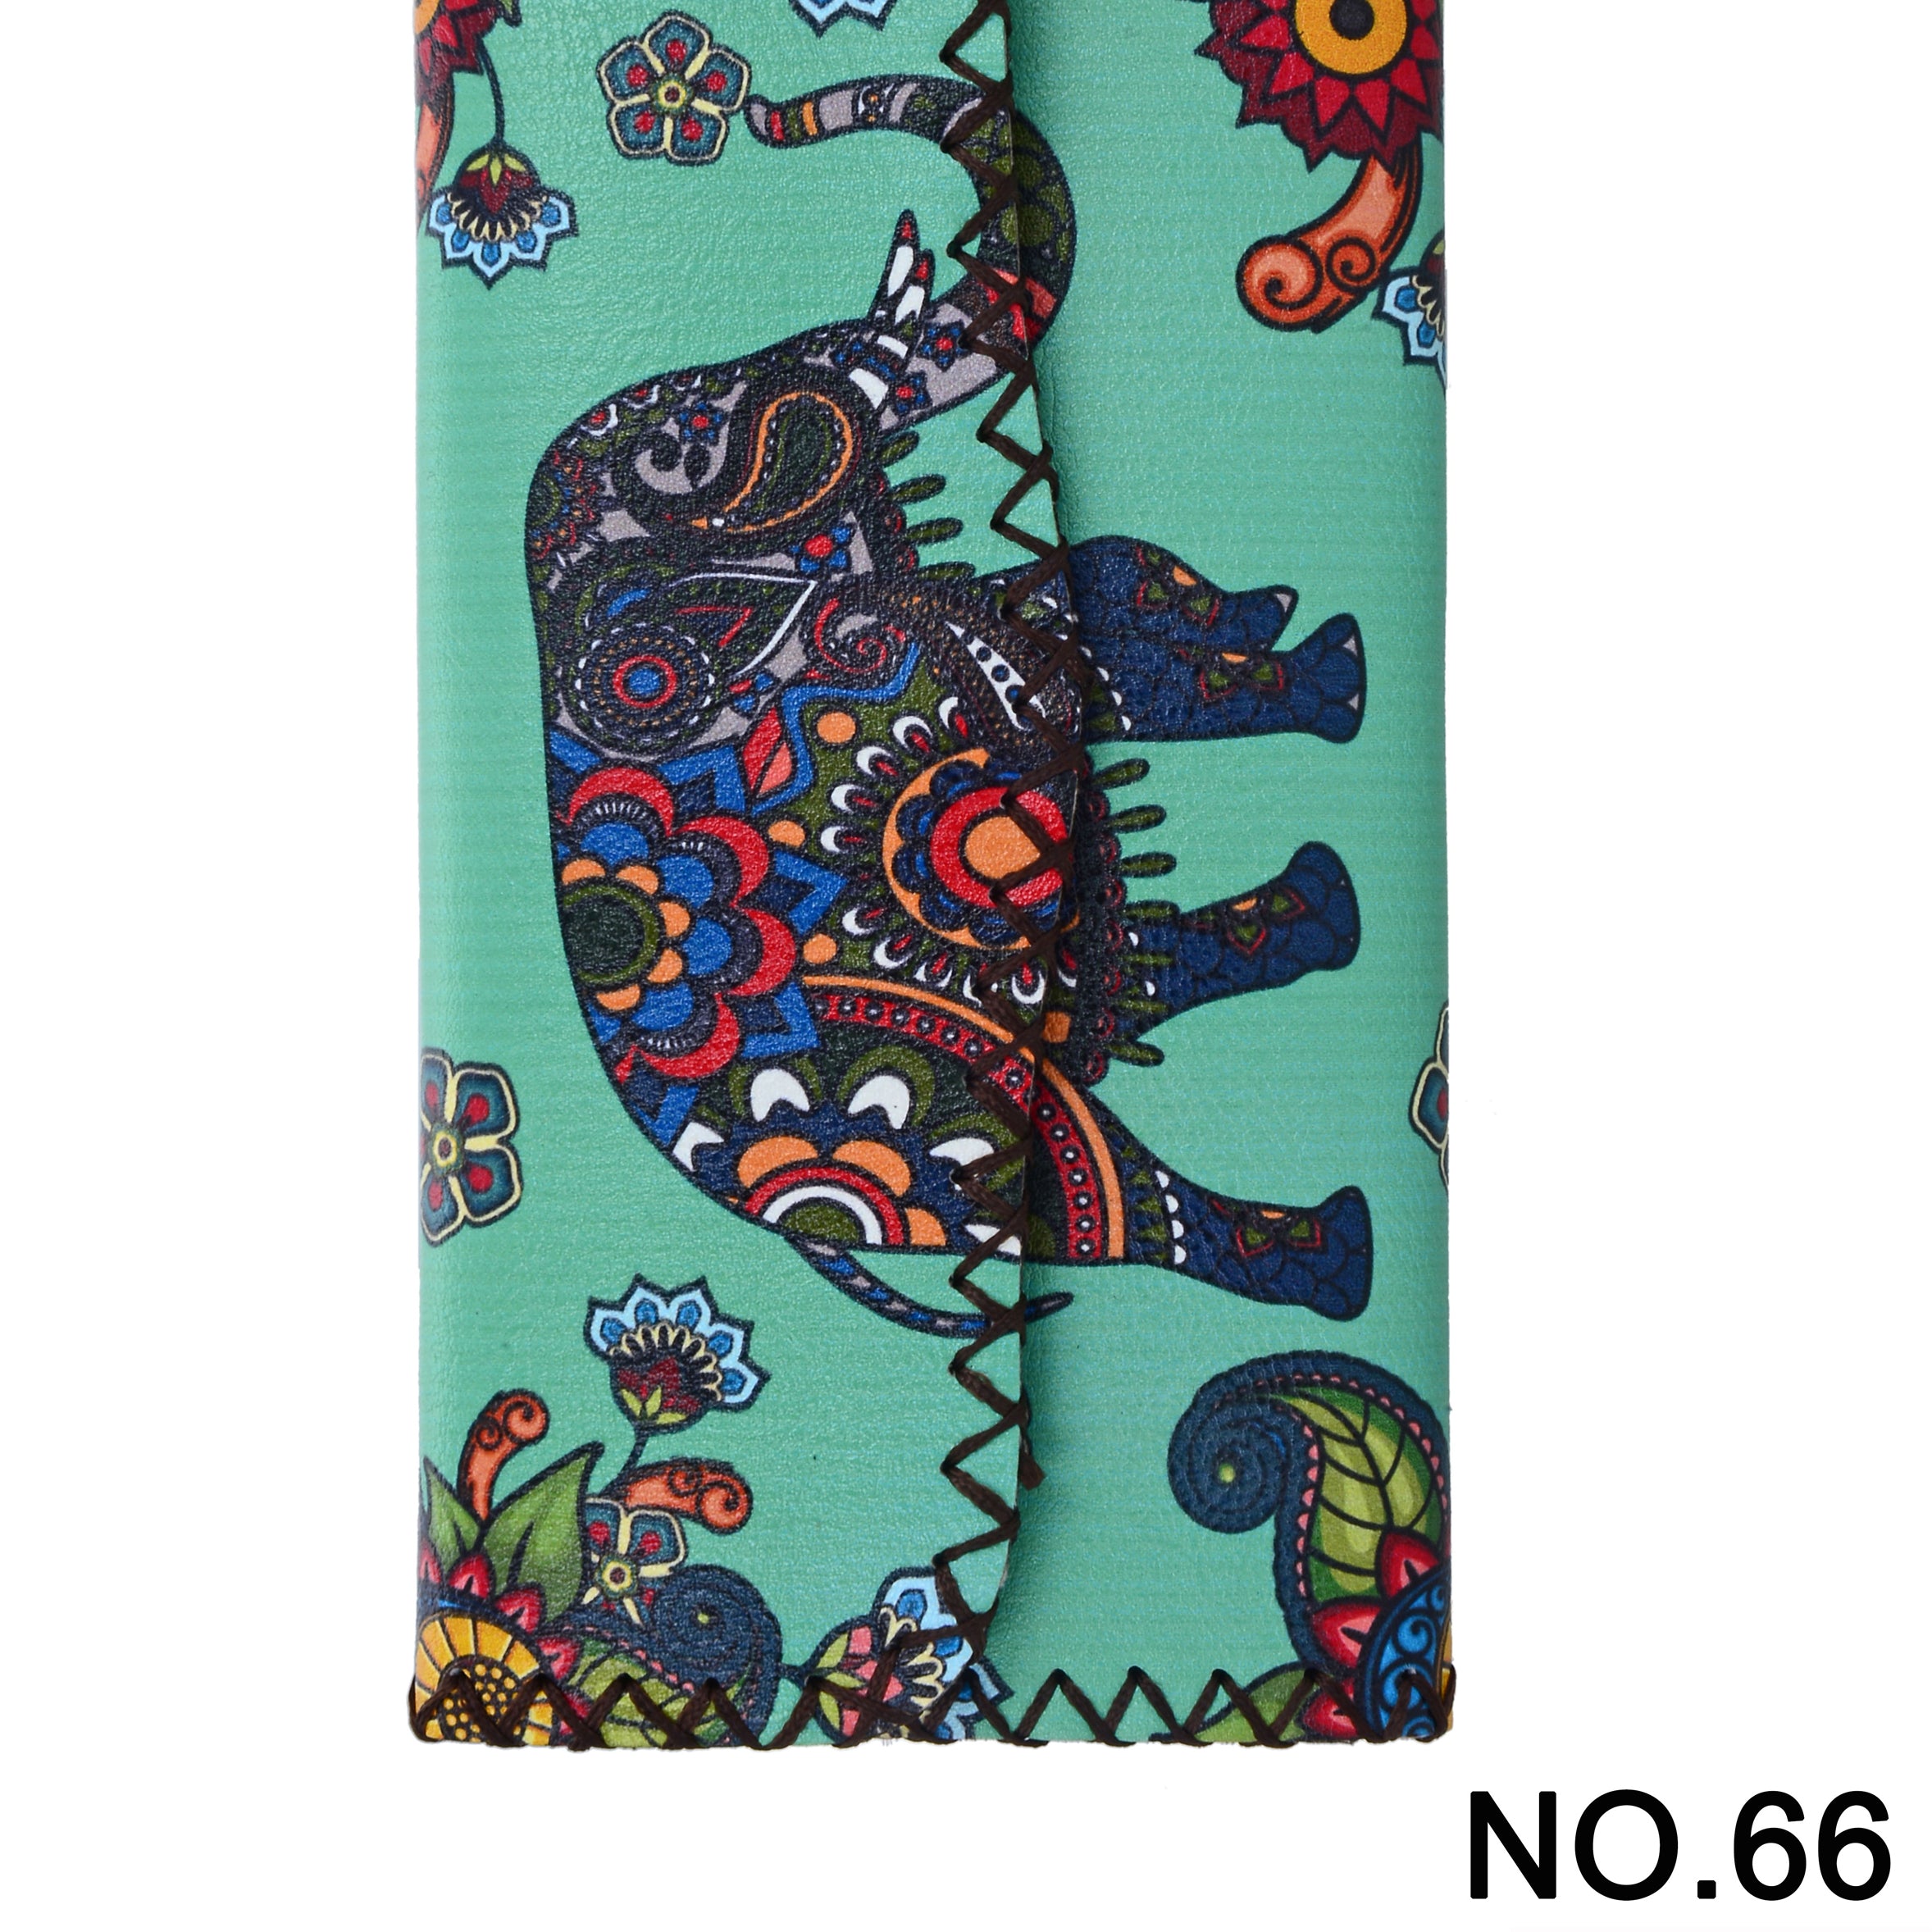 Floral Elephant Printed Wallet HB0582 - NO.66